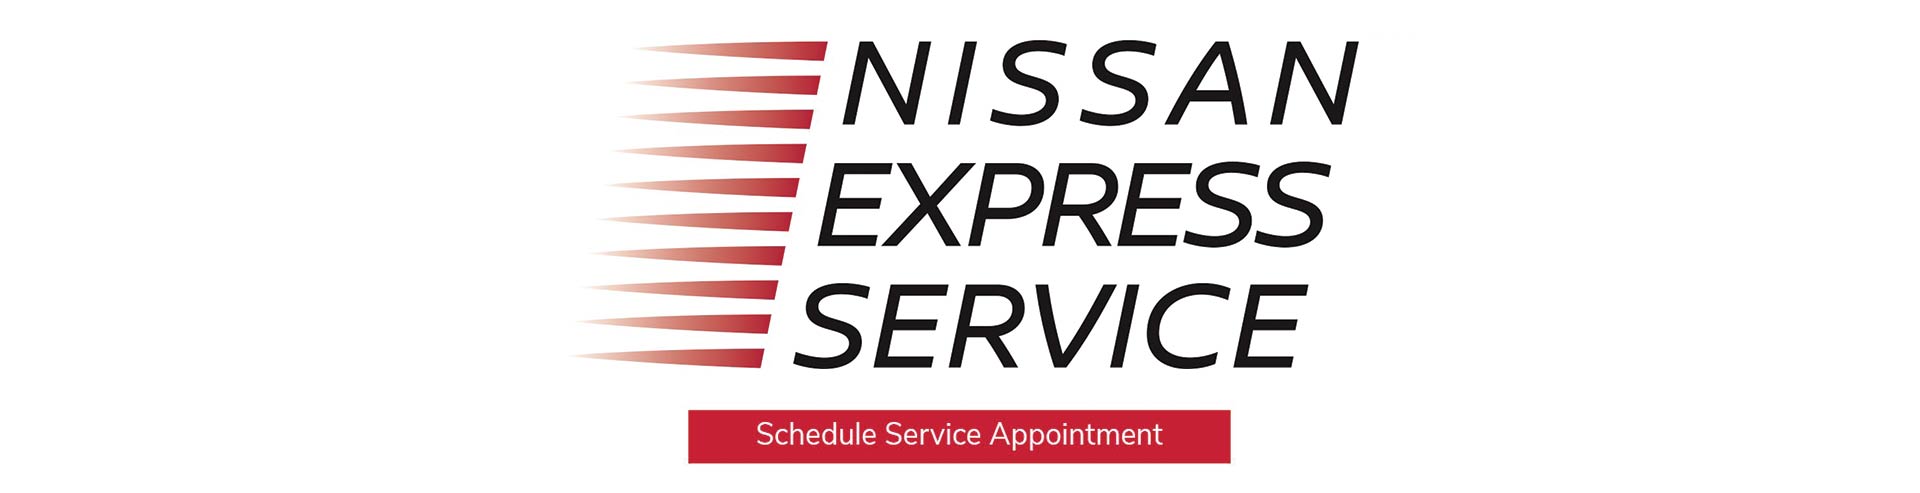 Express-service.jpg